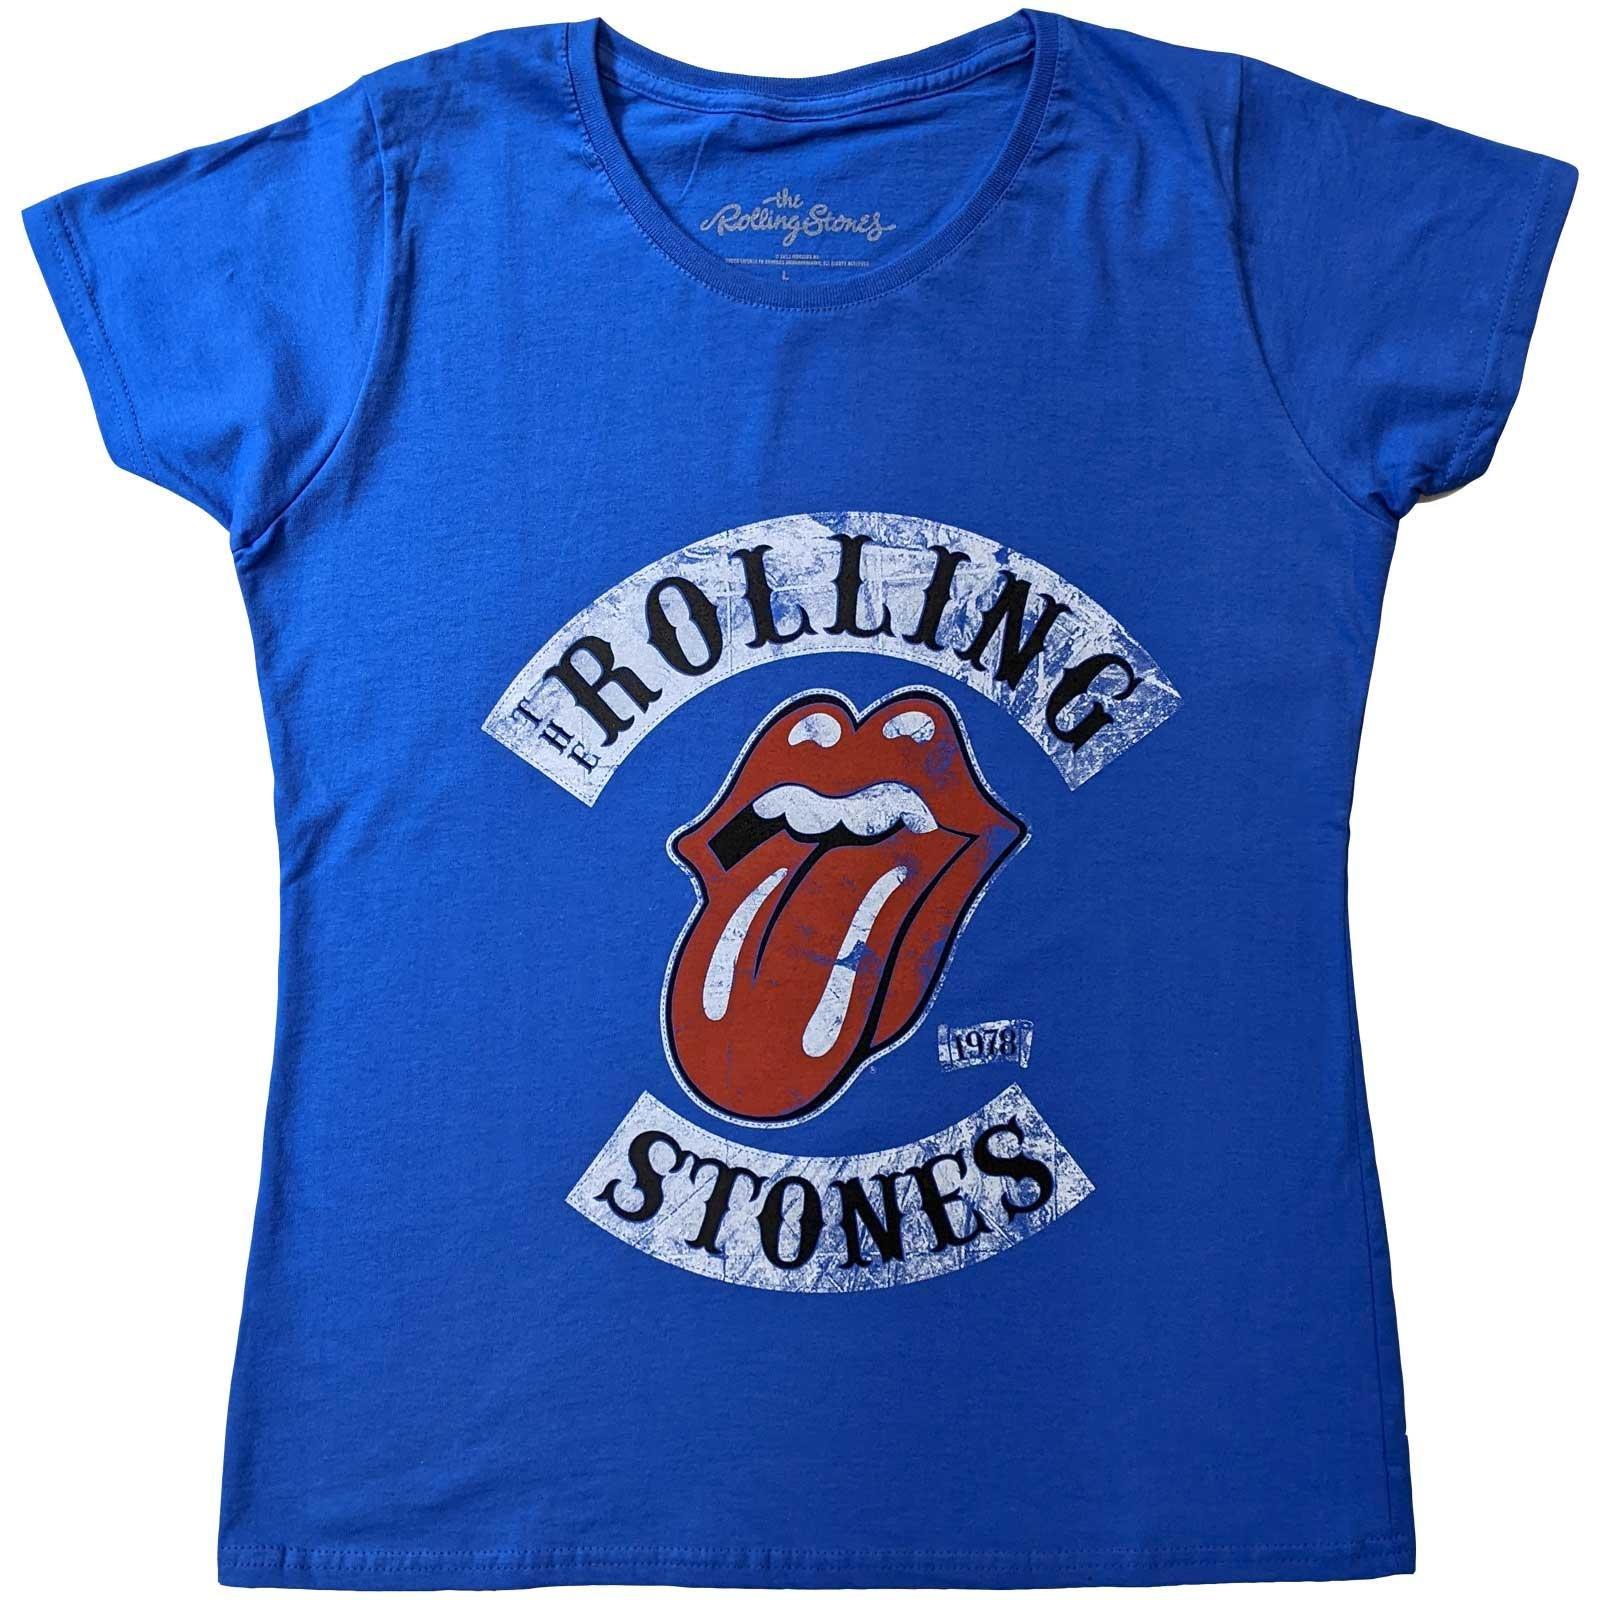 Tour '78 Tshirt Damen Blau L von The Rolling Stones